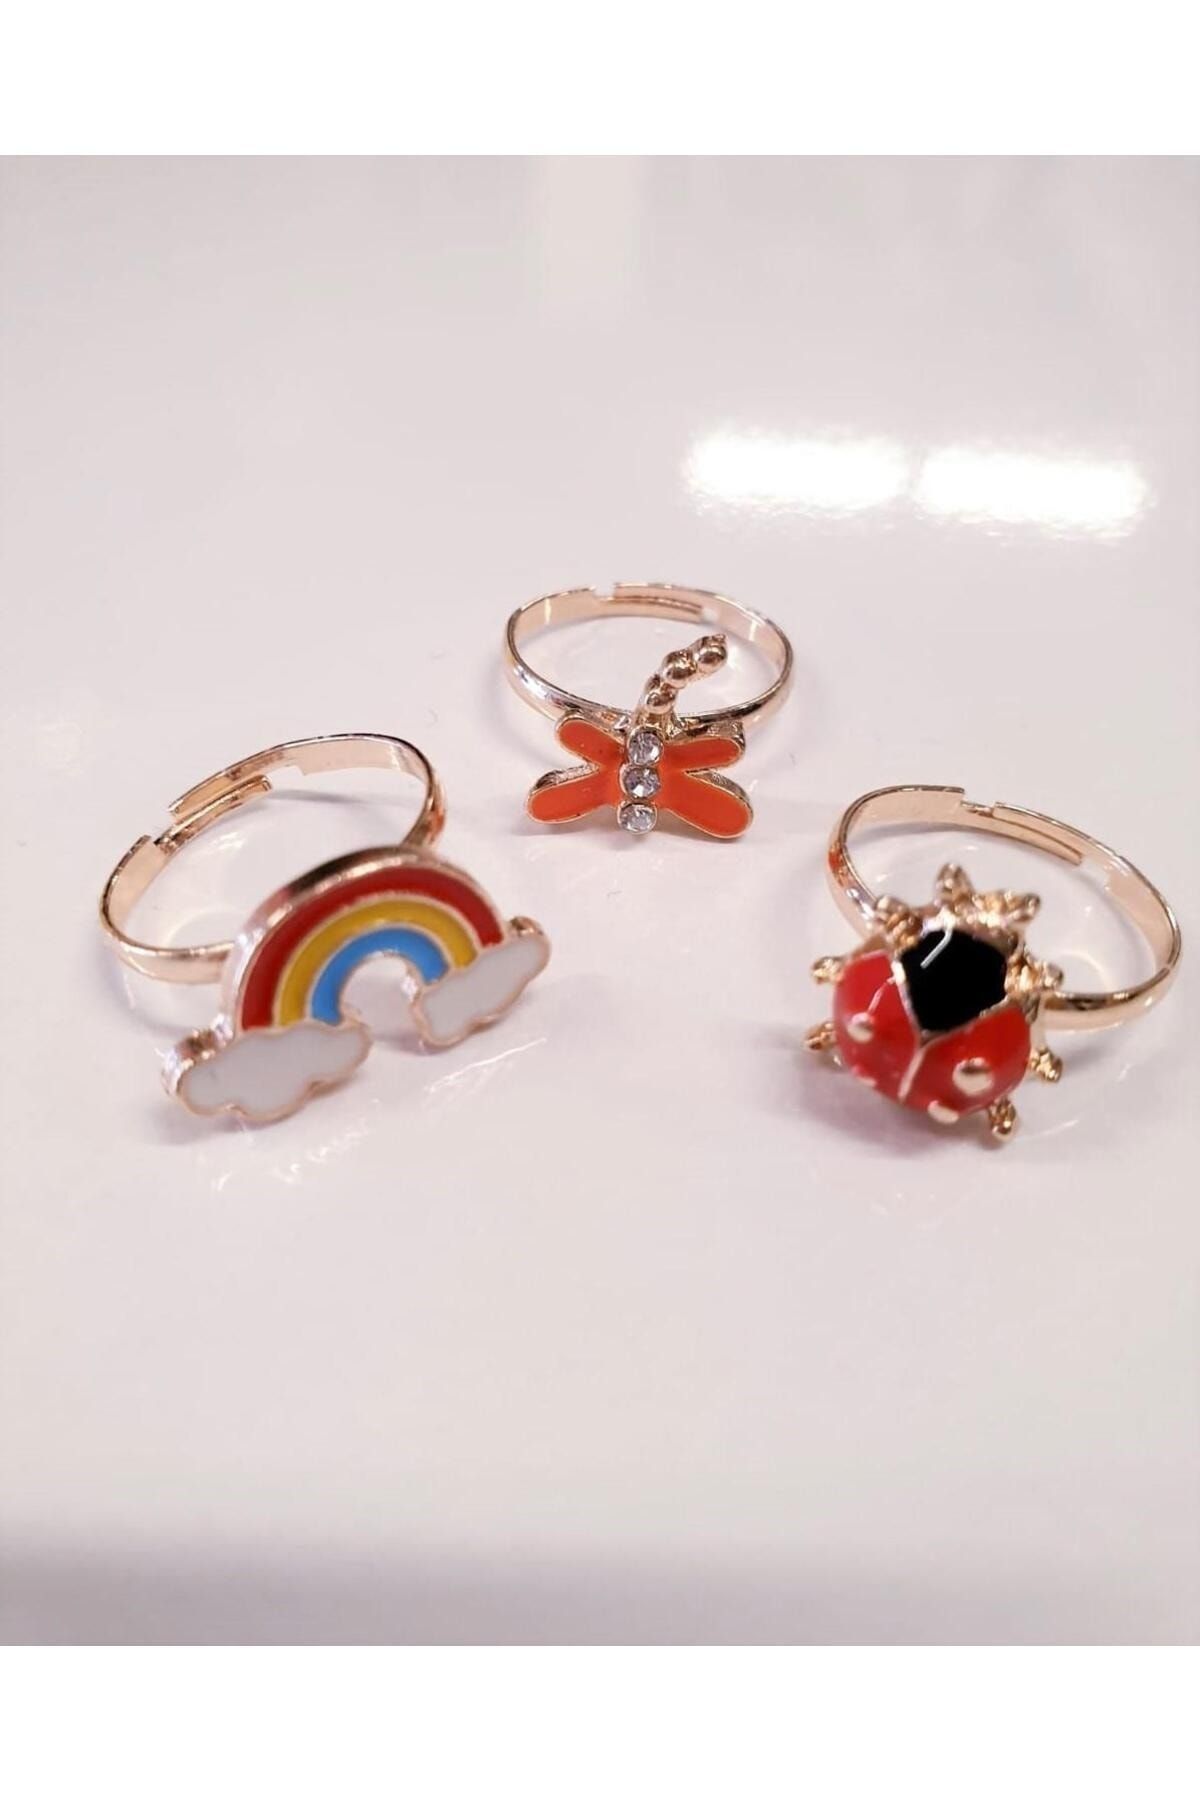 5/3Pcs Cute Cartoon Rings Little Girls Jewelry Kids Birthday Gifts - No Box  | eBay